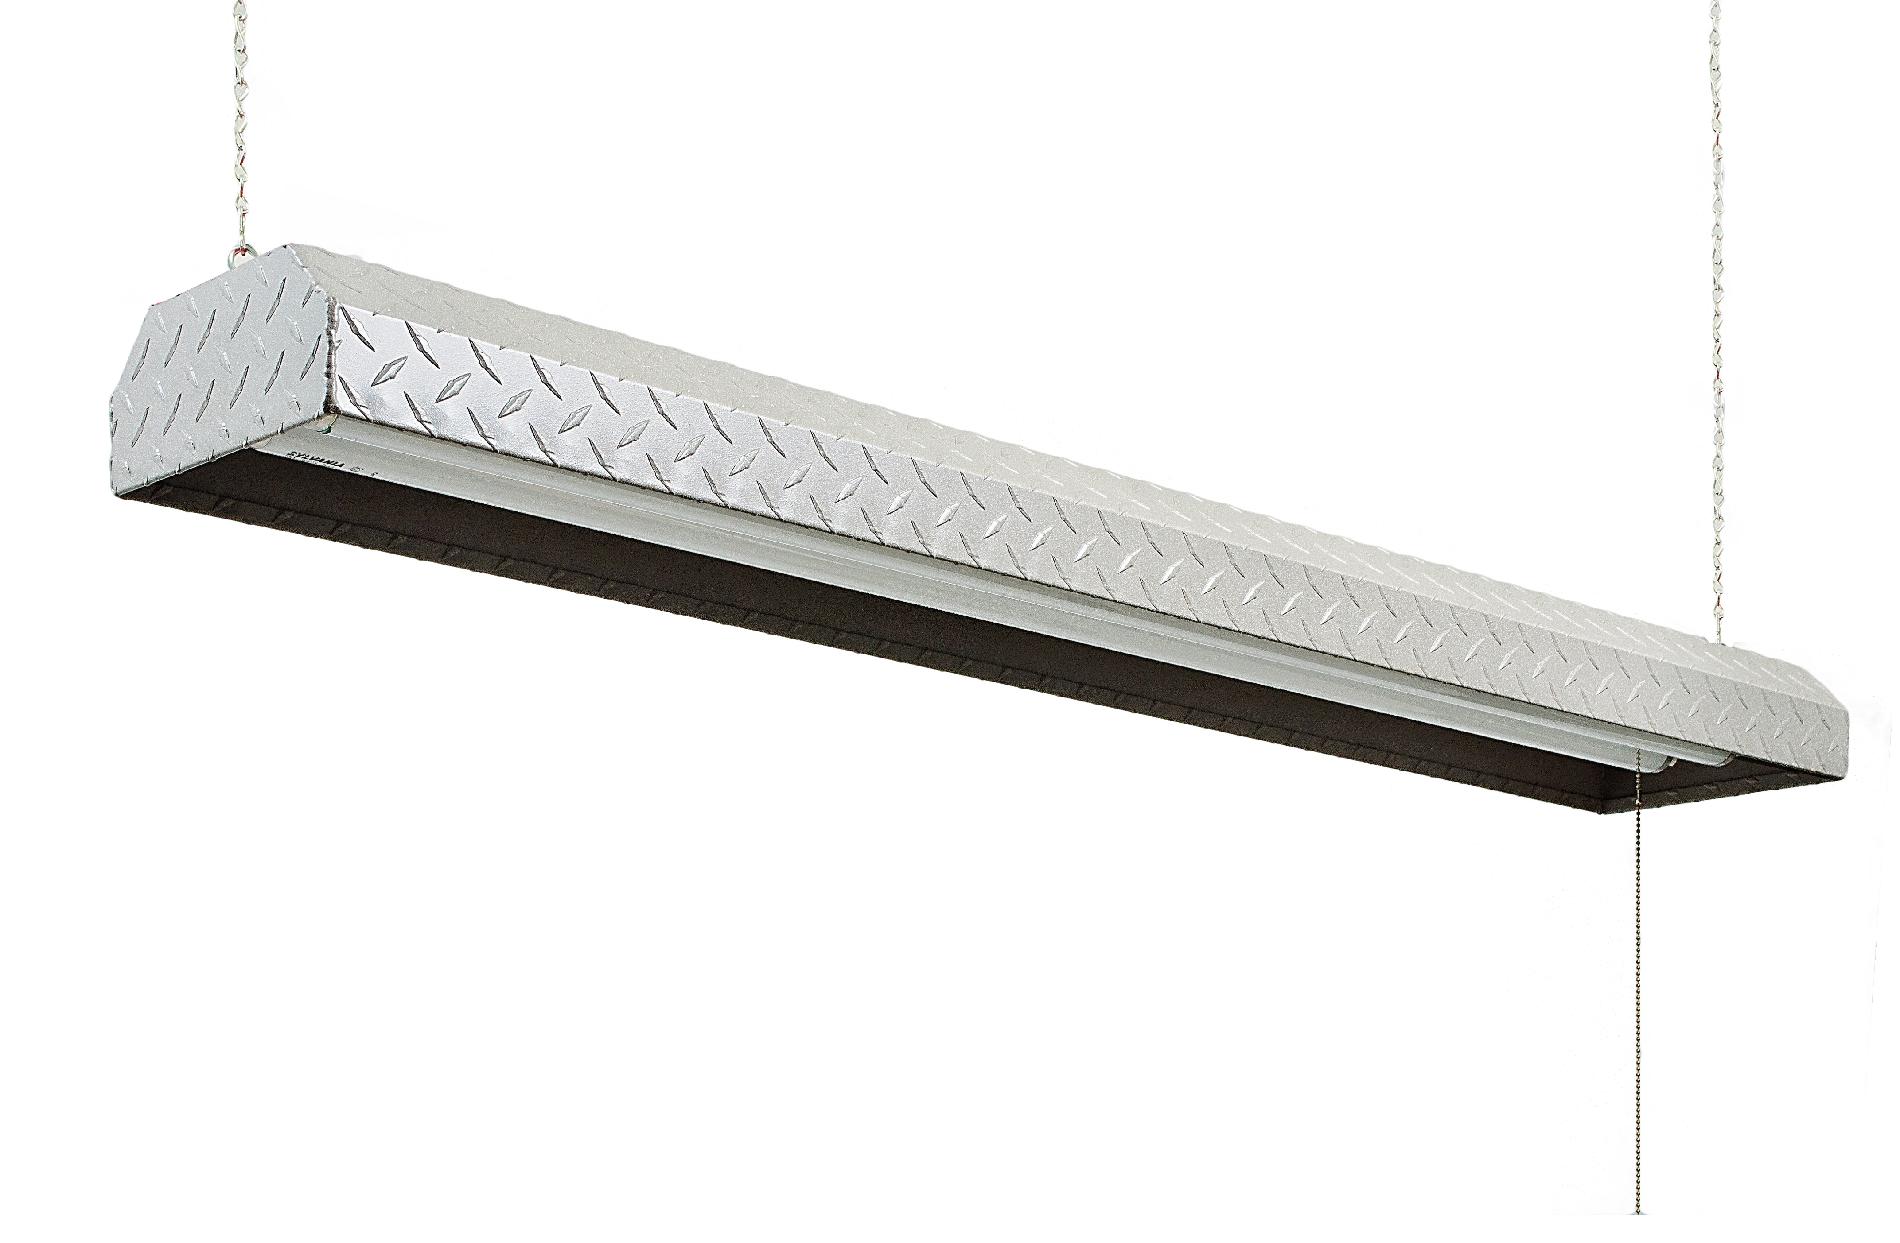 Geneva 50" Long Mojave Treadplate Aluminum Shop Light- WHILE QUANTITIES LAST!